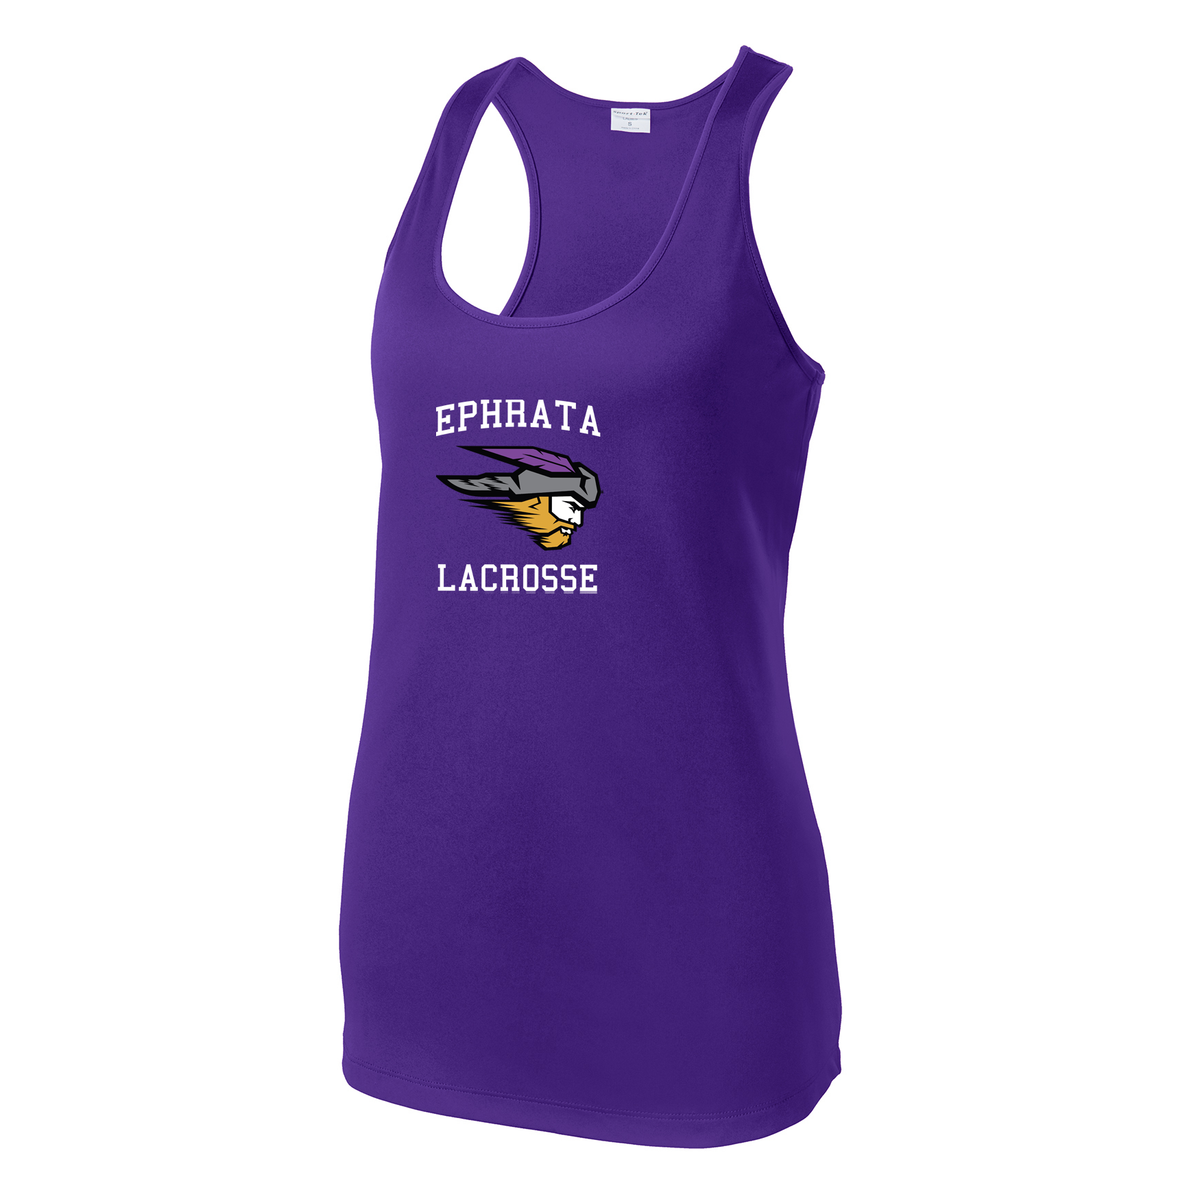 Ephrata Lacrosse Women's Racerback Tank